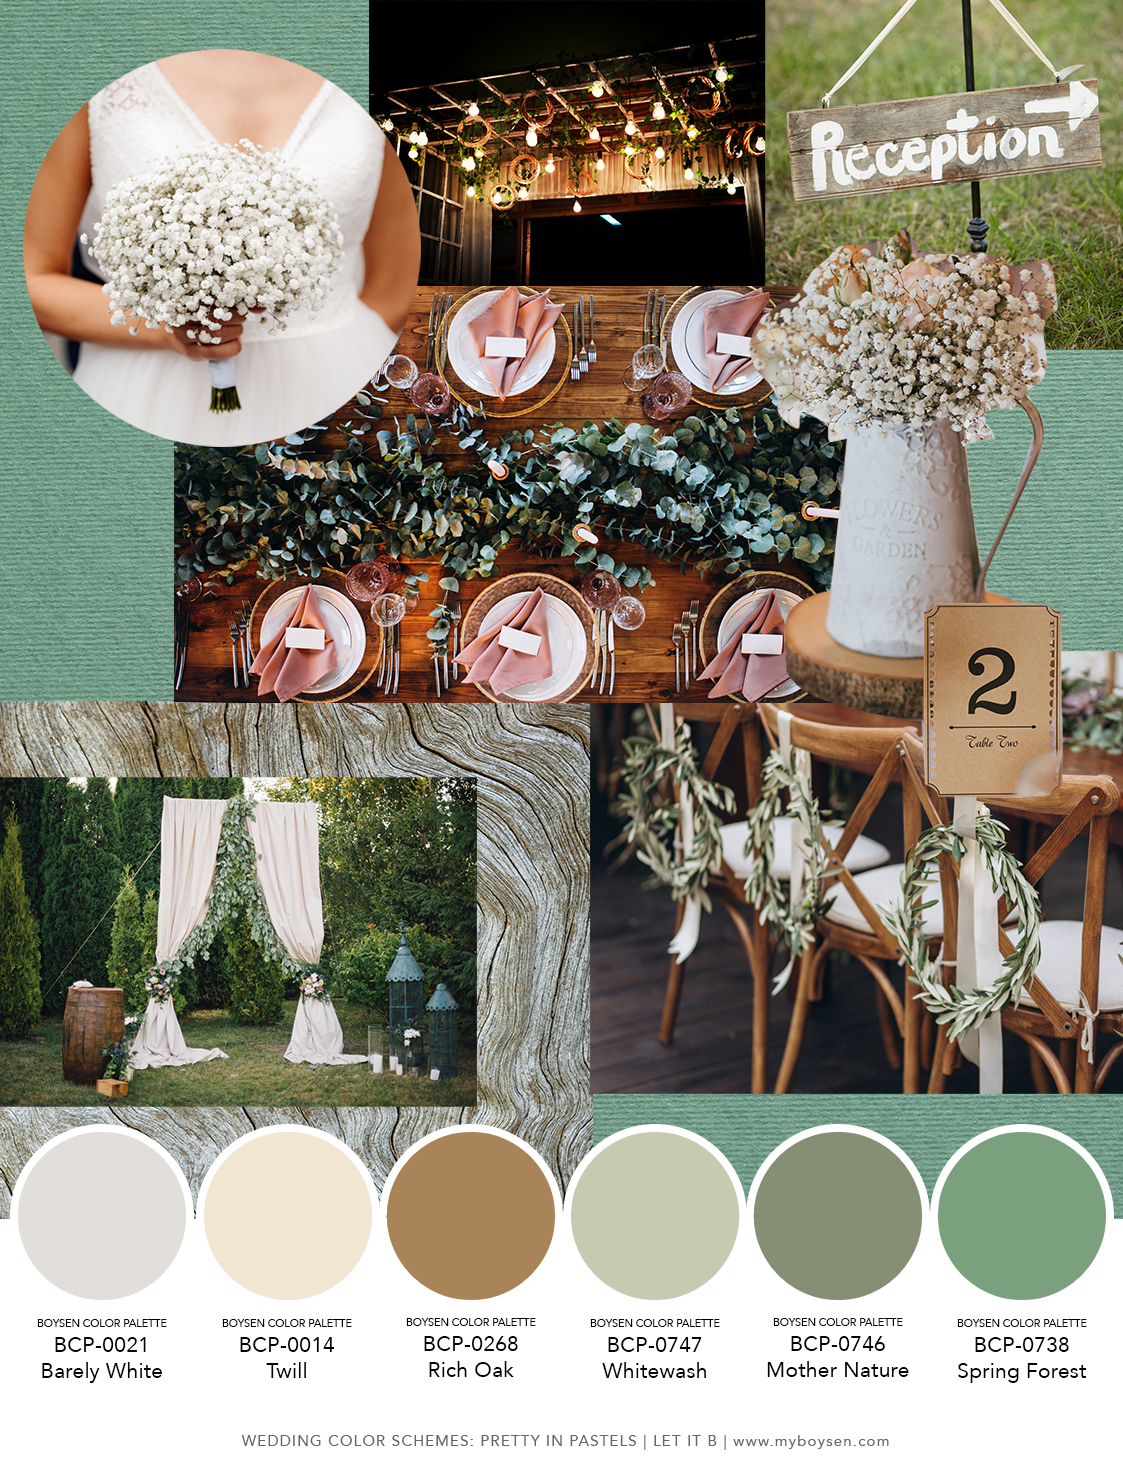 Wedding Color Schemes: Pretty in Pastels | MyBoysen